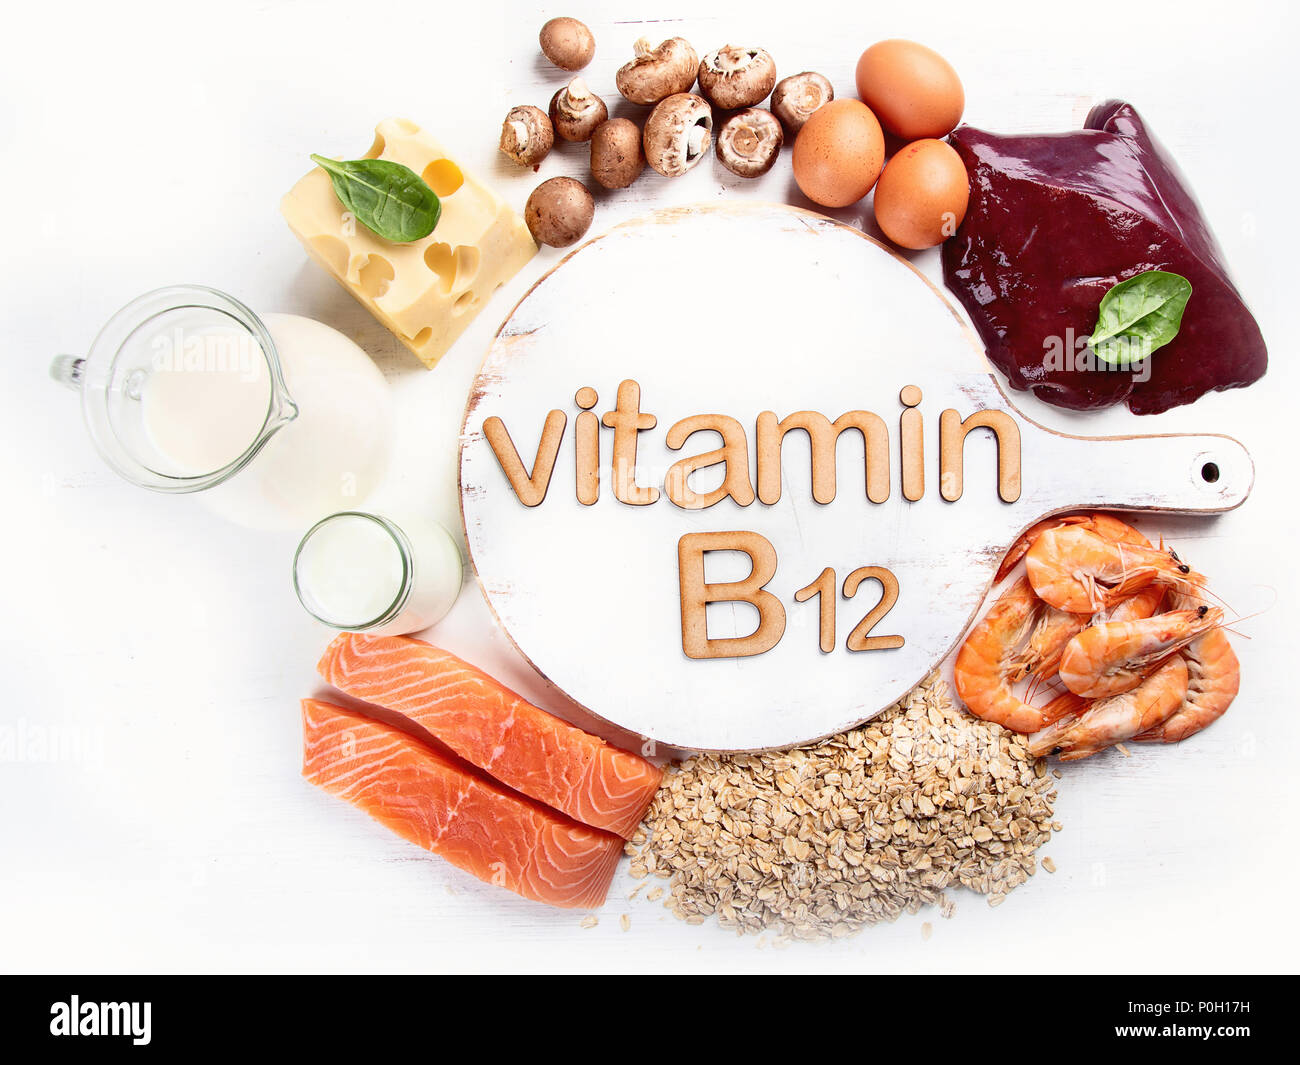 Lebensmittel höchsten Vitamin B12 (Cobalamin). Gesunde Ernährung  Stockfotografie - Alamy